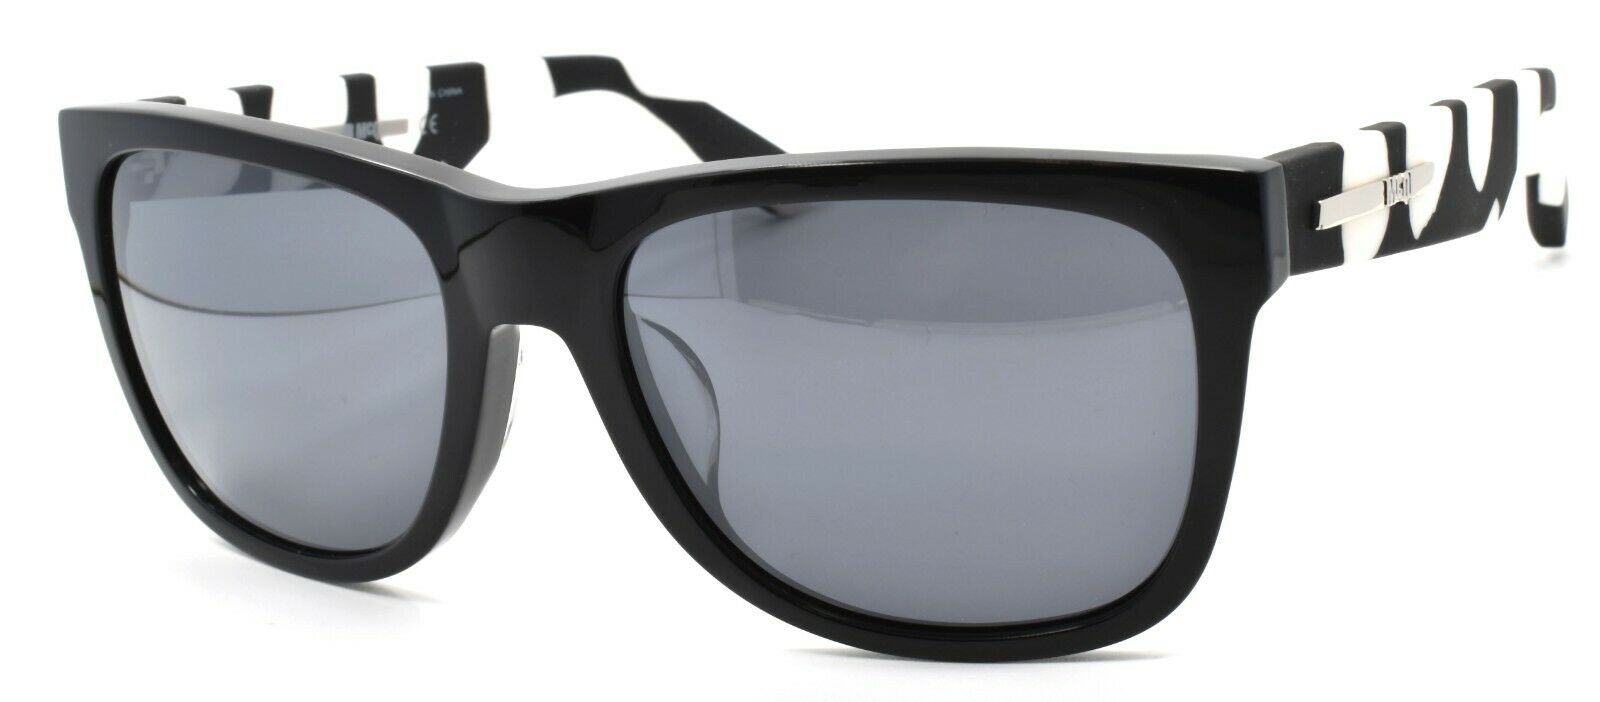 1-McQ Alexander McQueen MQ0018SA 008 Women's Sunglasses Black & White / Gray-889652030289-IKSpecs